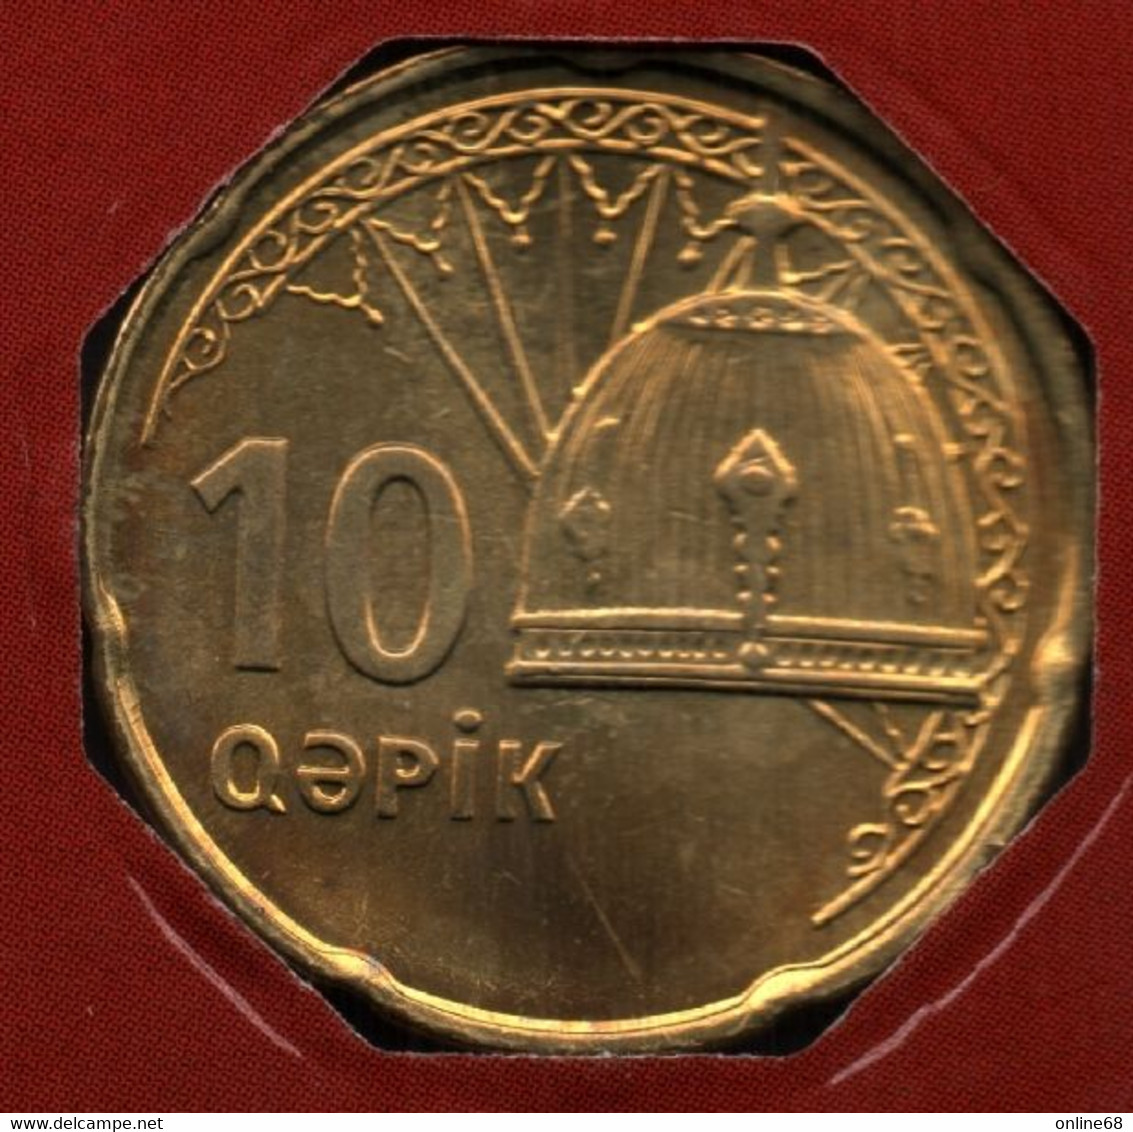 AZERBAIDJAN 10 QEPIK ND (2006)  KM# 42 - Azerbaigian